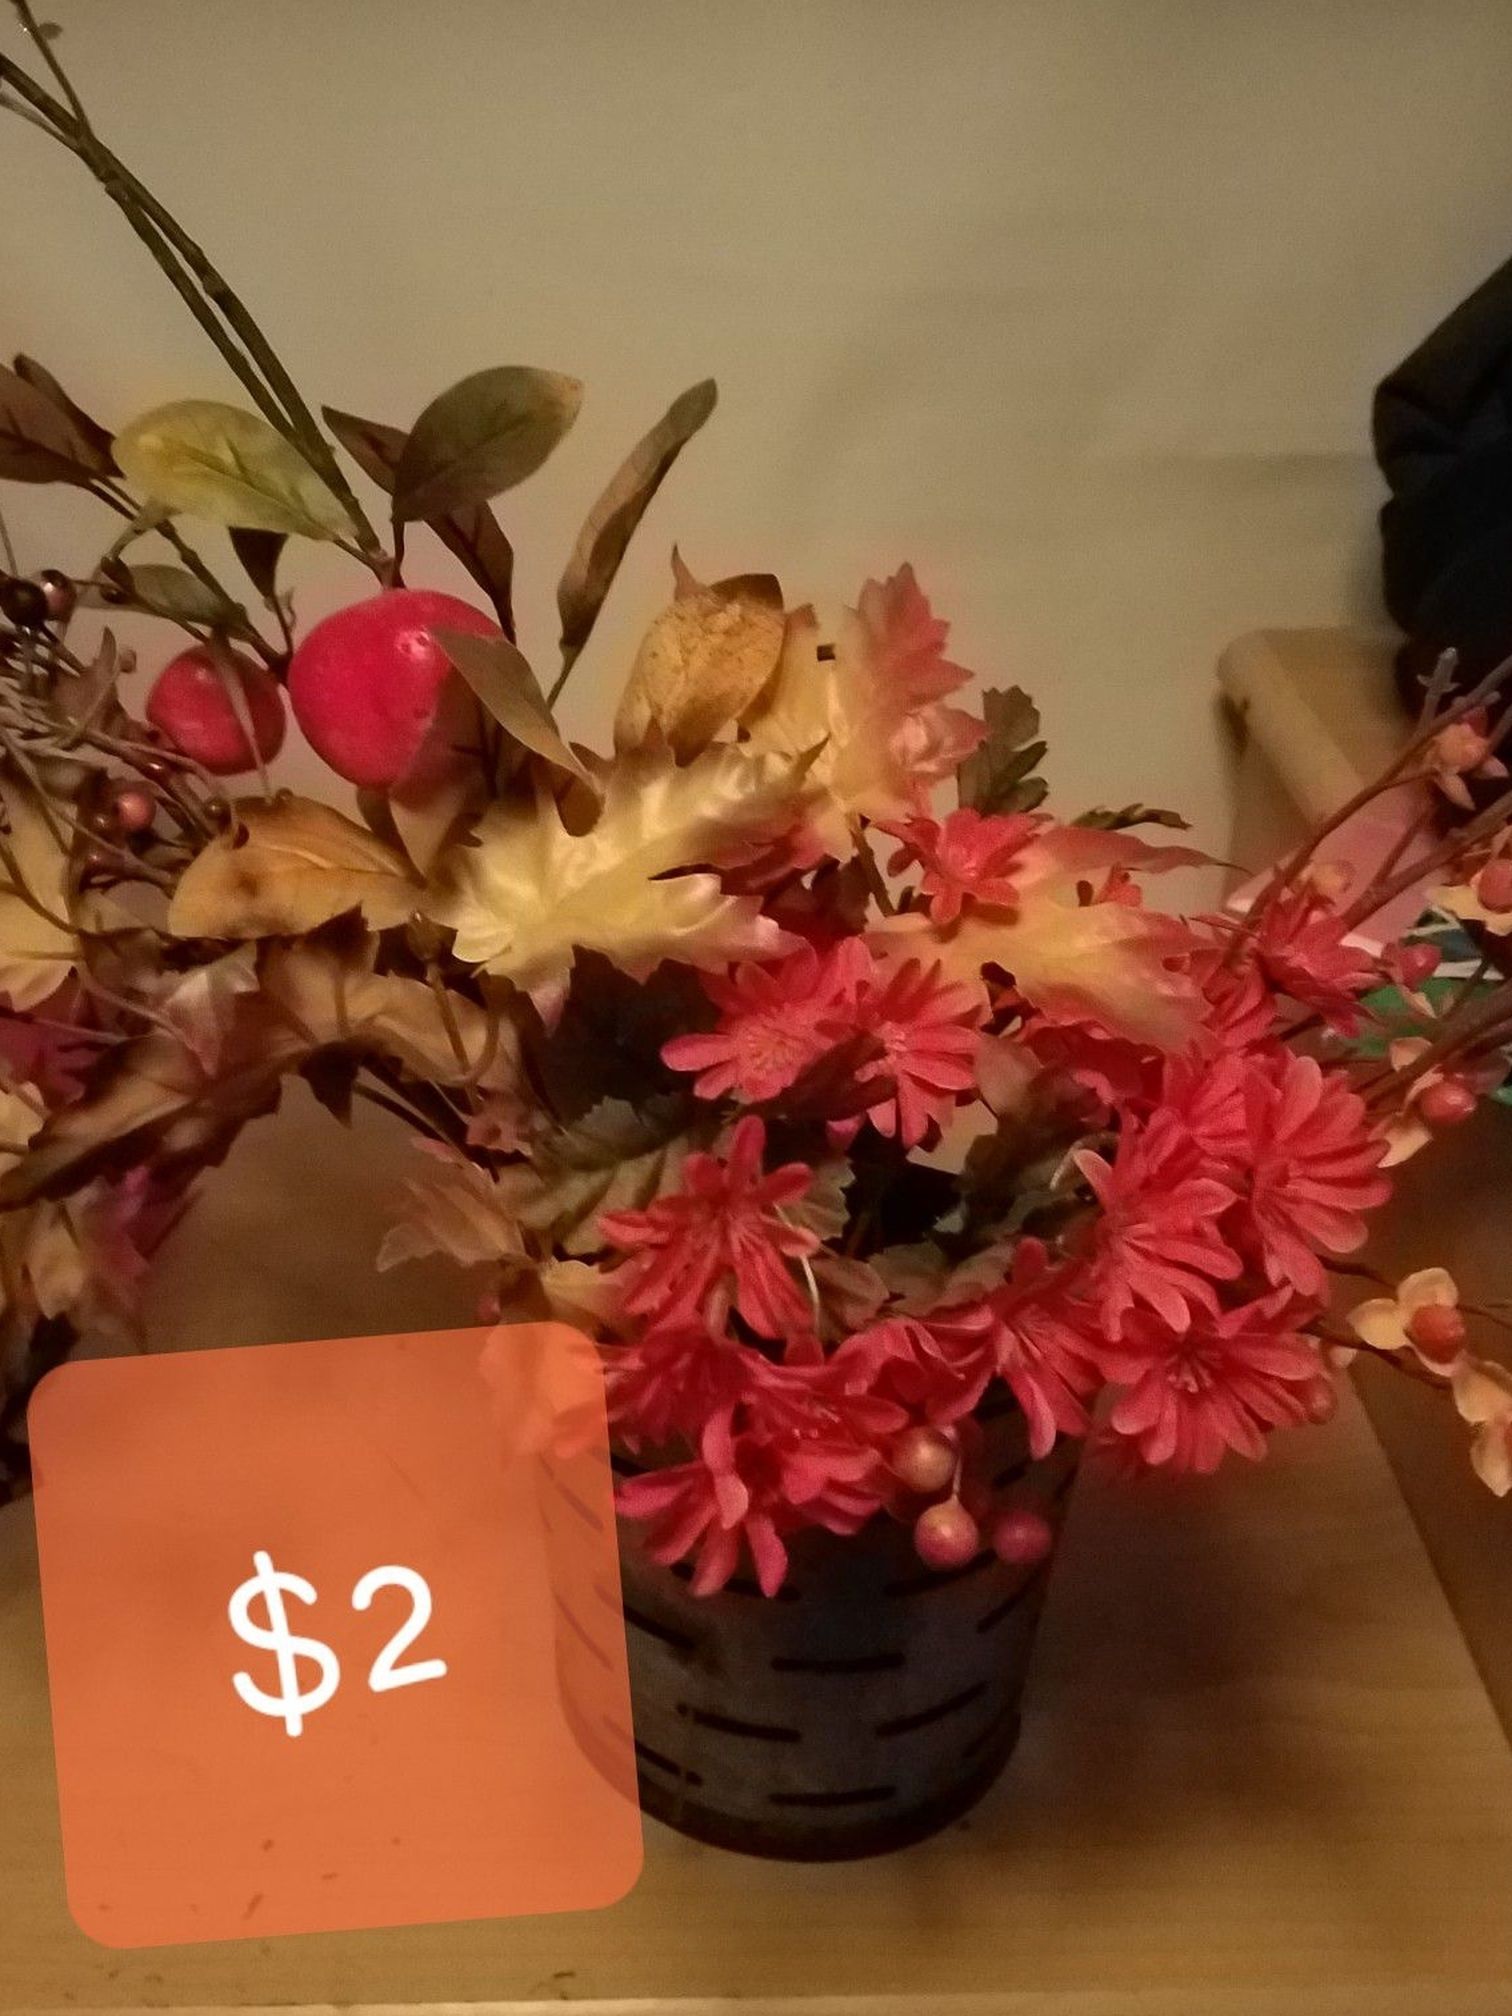 Flower arrangements and vases